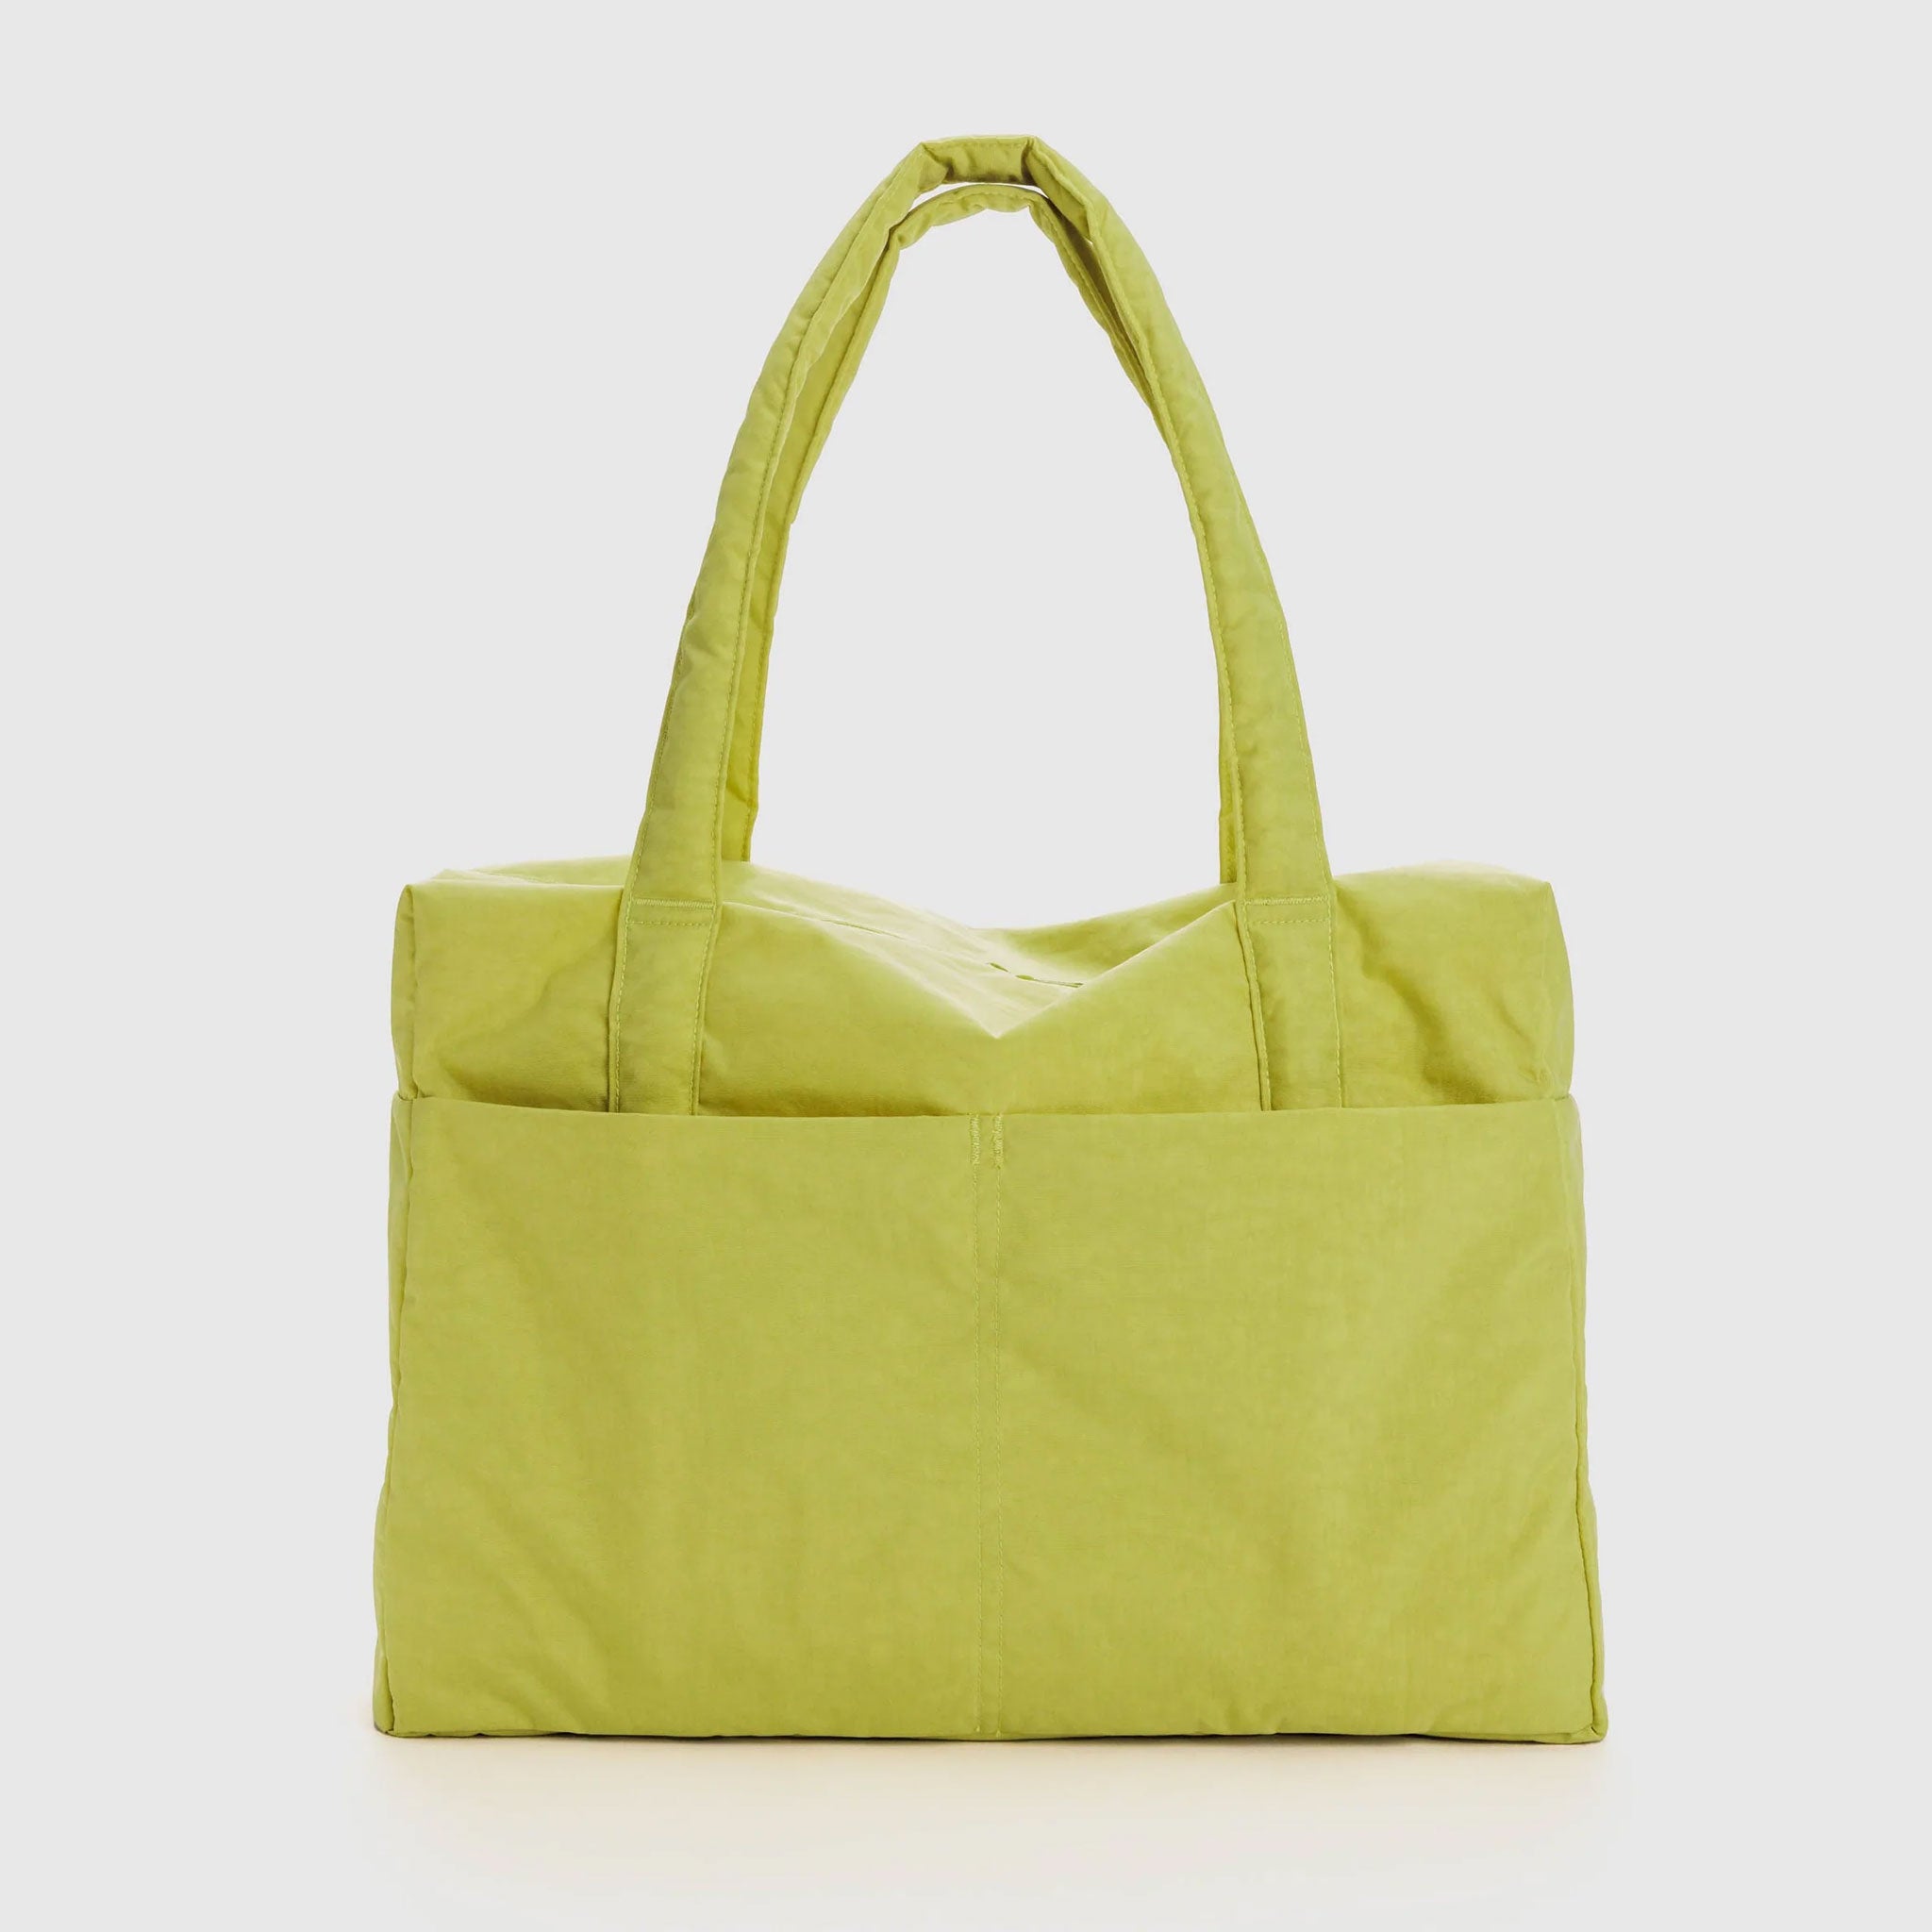 a lime green nylon bag